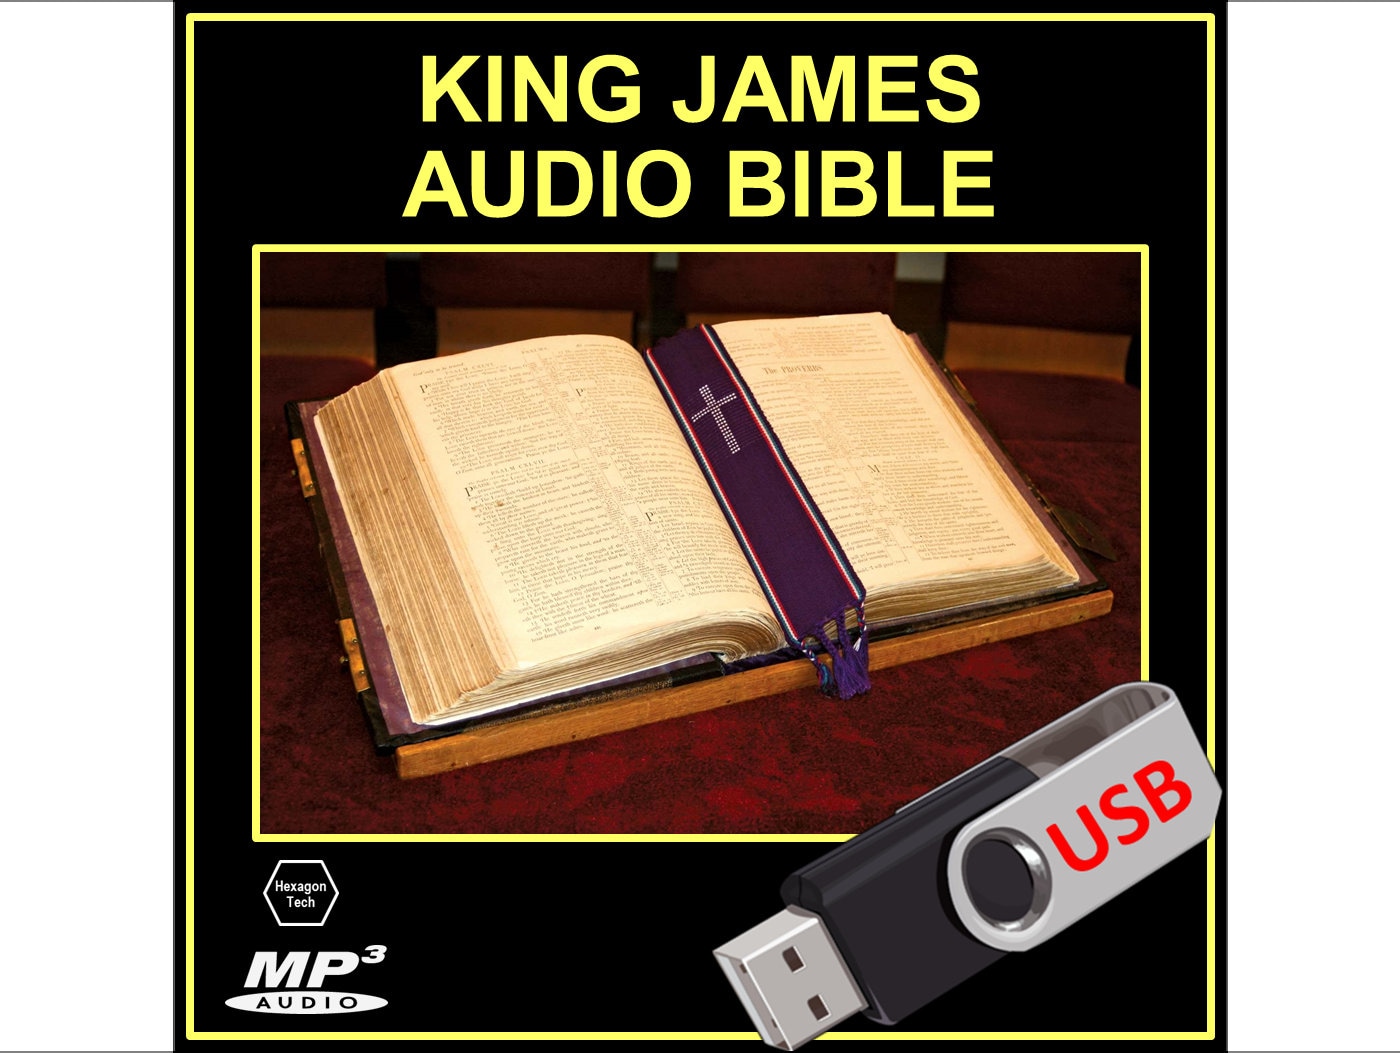 KJV King James Audio Bible in MP3 USB Thumb Drive - Etsy